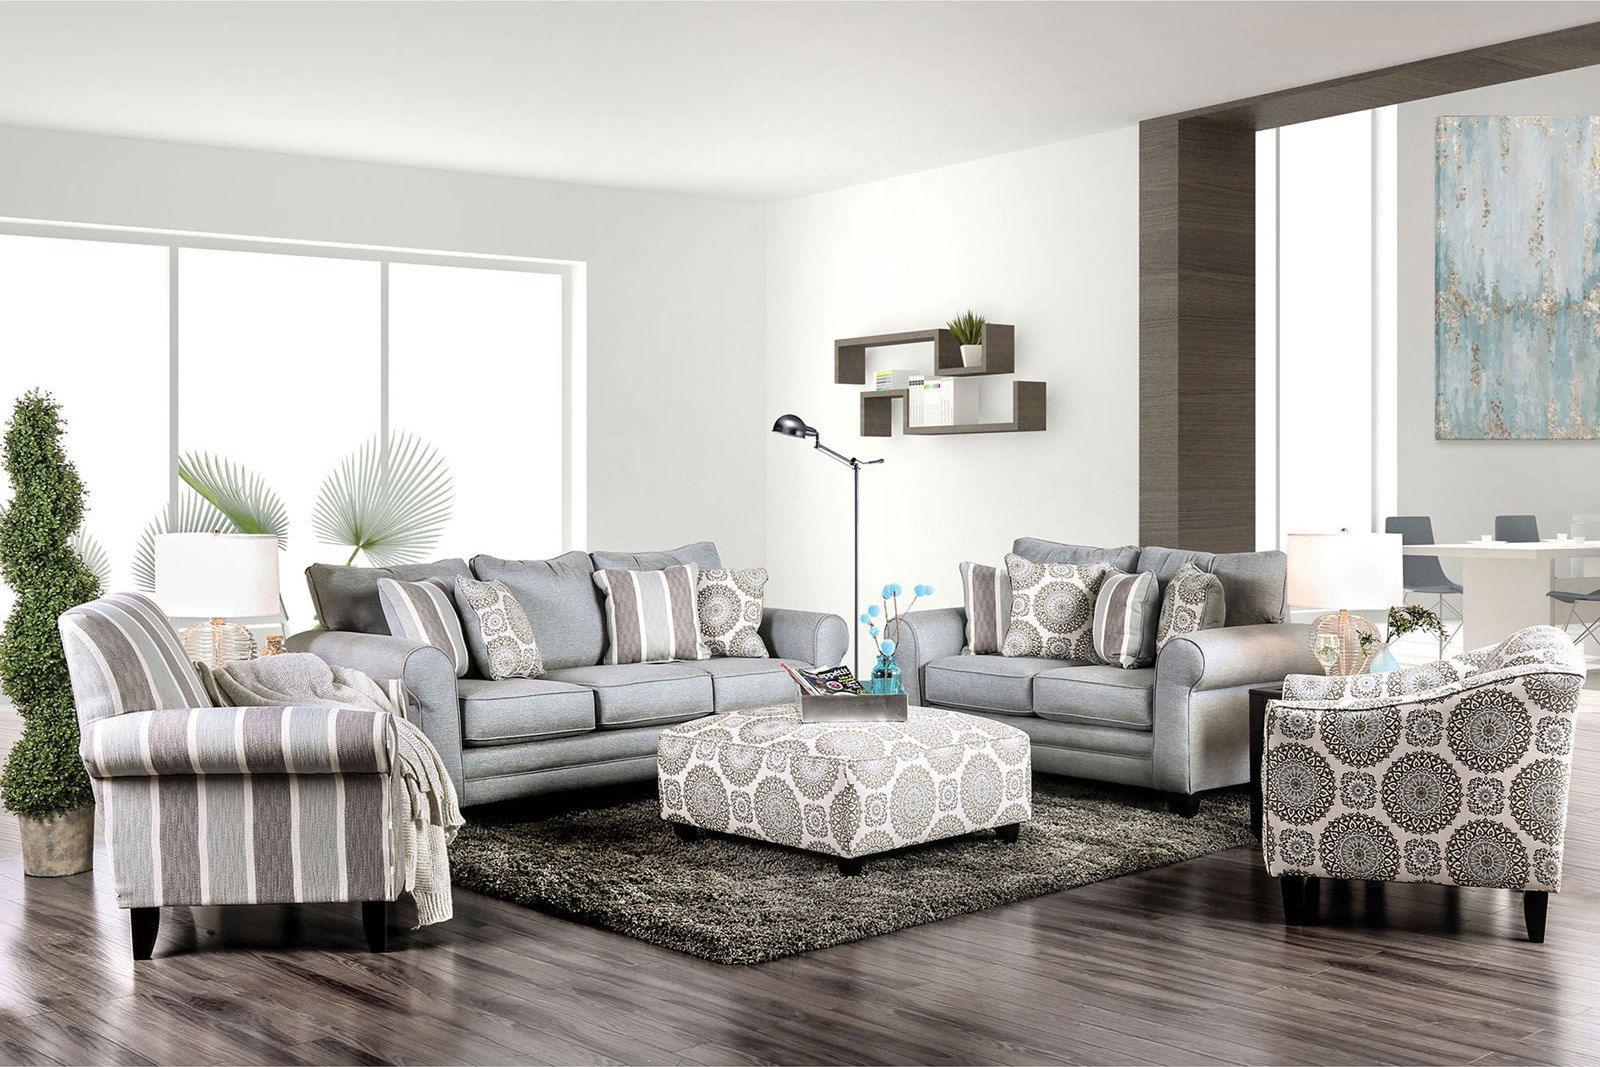 Furniture of America - Misty - Sofa - Blue Gray - 5th Avenue Furniture